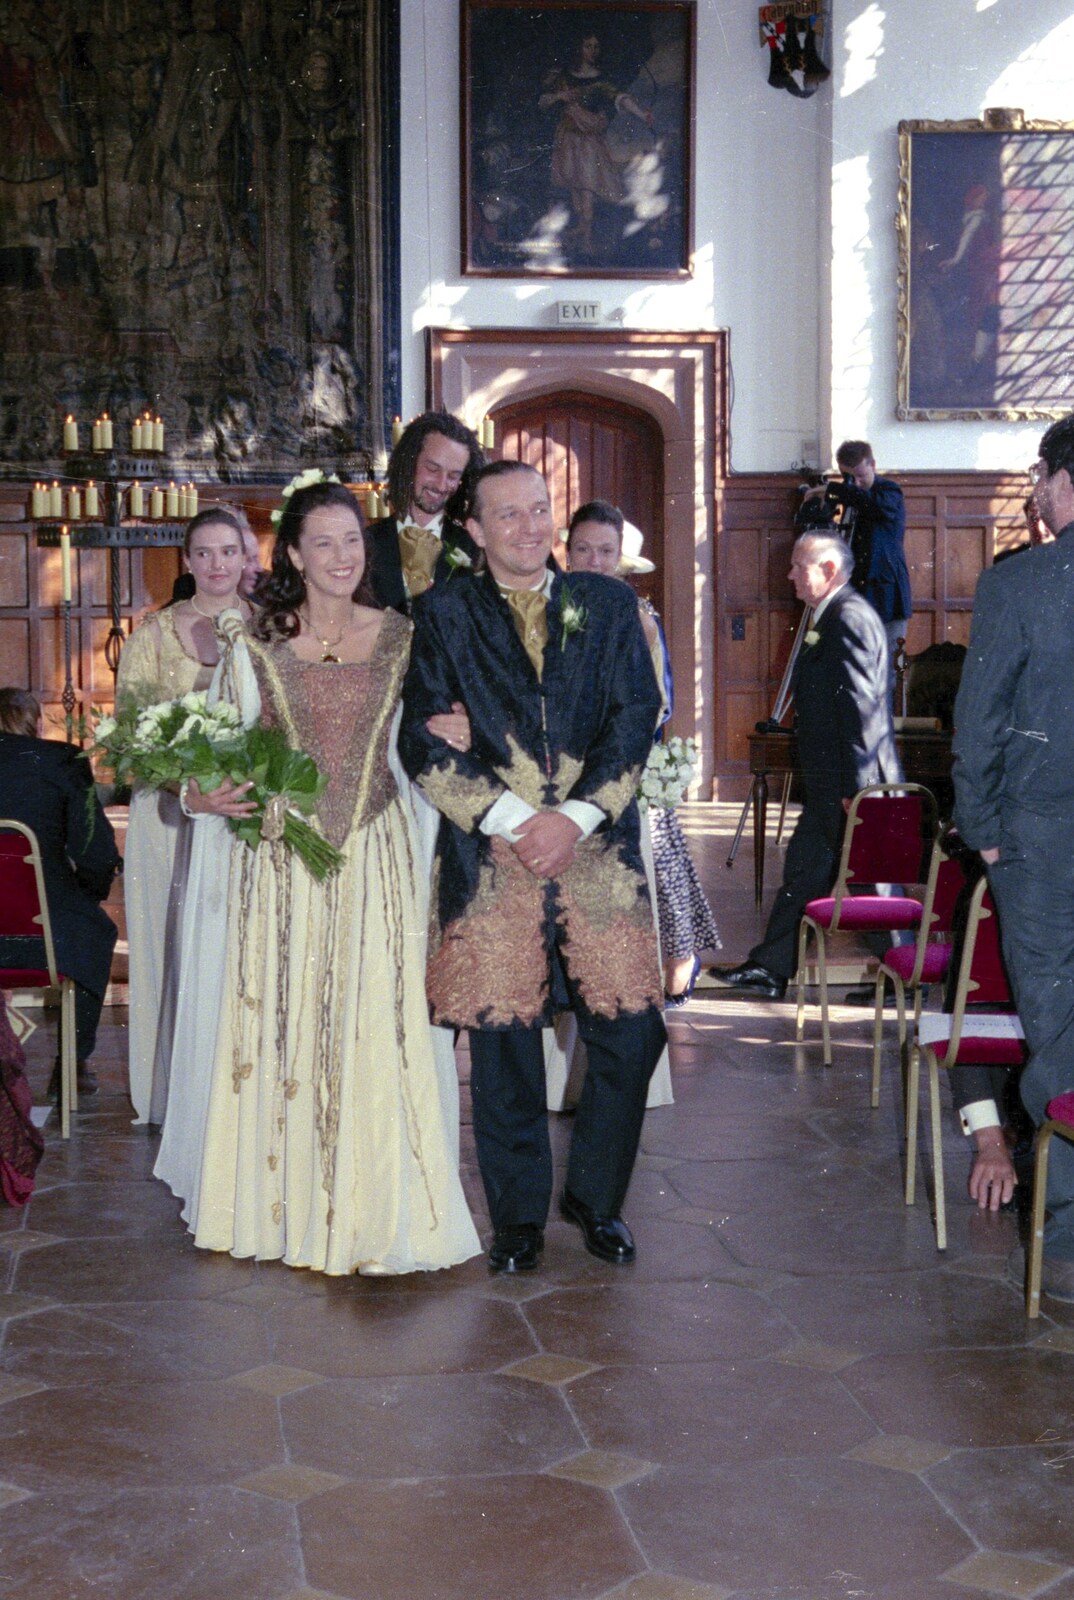 Stuart and Sarah's CISU Wedding, Naworth Castle, Brampton, Cumbria - 21st September 1996: Sarah and Stuart walk up the aisle